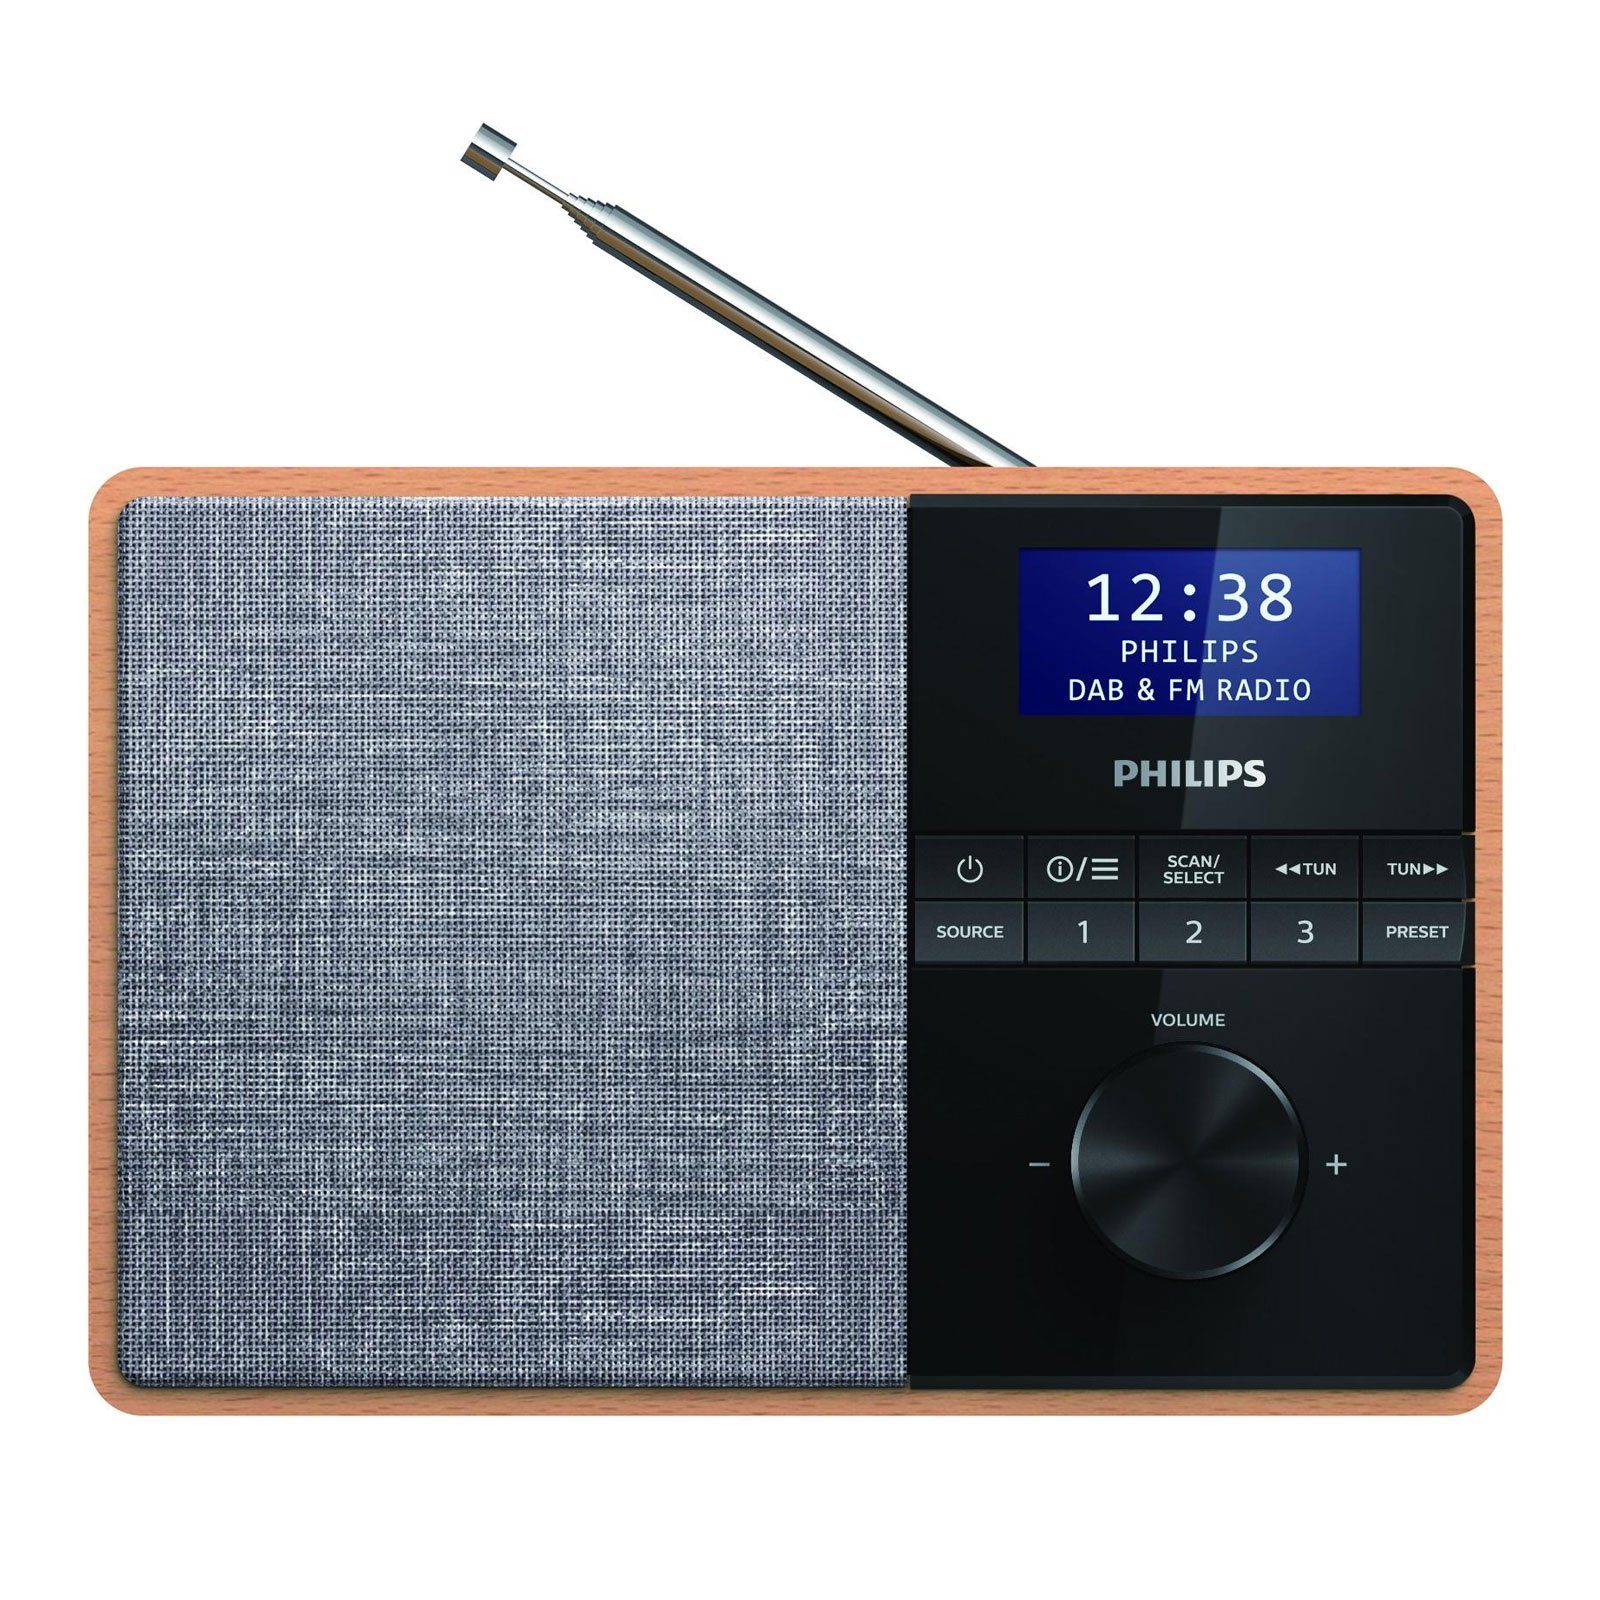 Küchen-Radio R5505 (DAB) Digitalradio (5 W) Philips